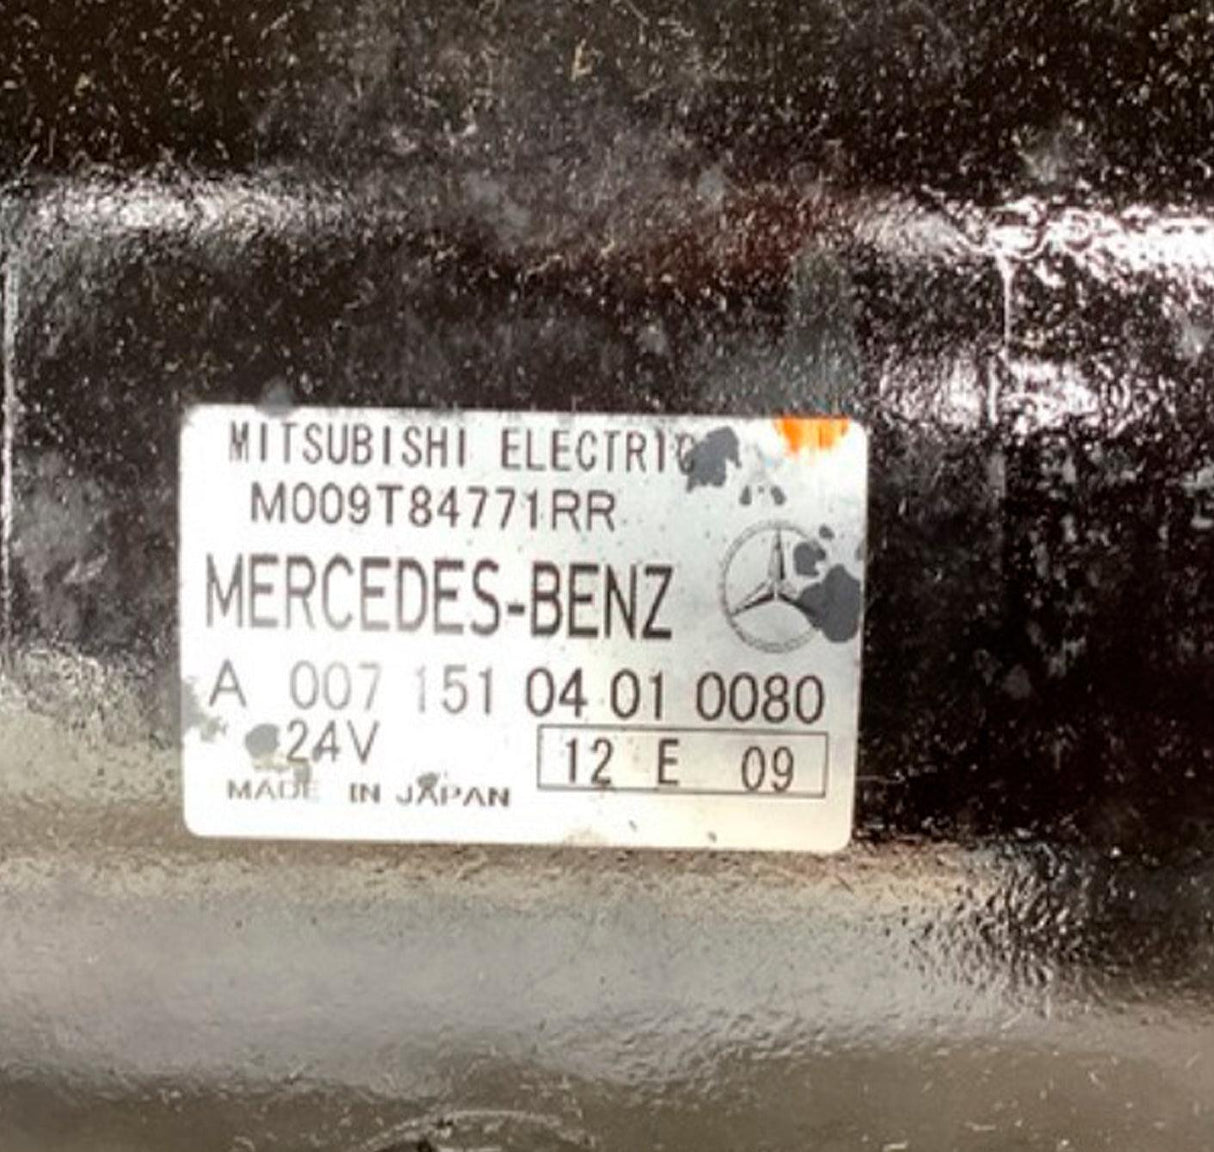 A 007 151 04 01 Genuine Mercedes-Benz Starter Motor 24V - Truck To Trailer